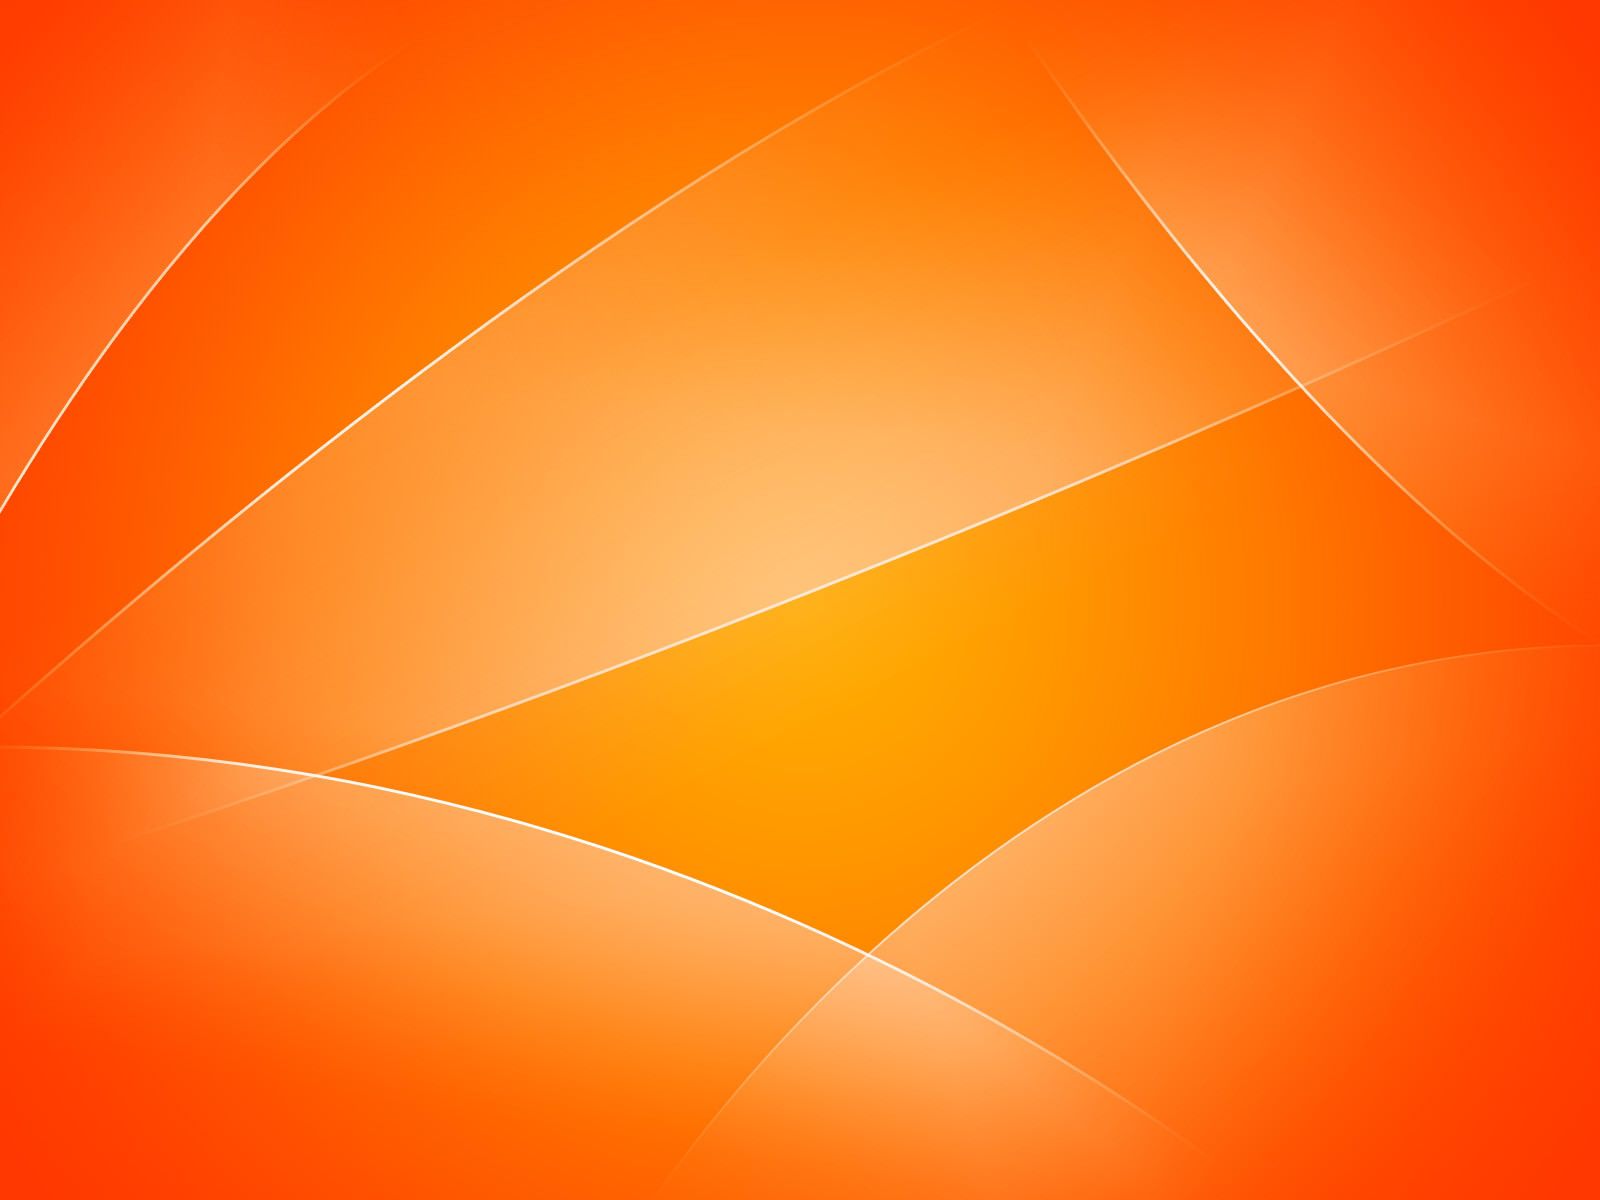 Cool Orange Fondos de pantalla | HD Wallpapers | Papel tapiz naranja, naranja